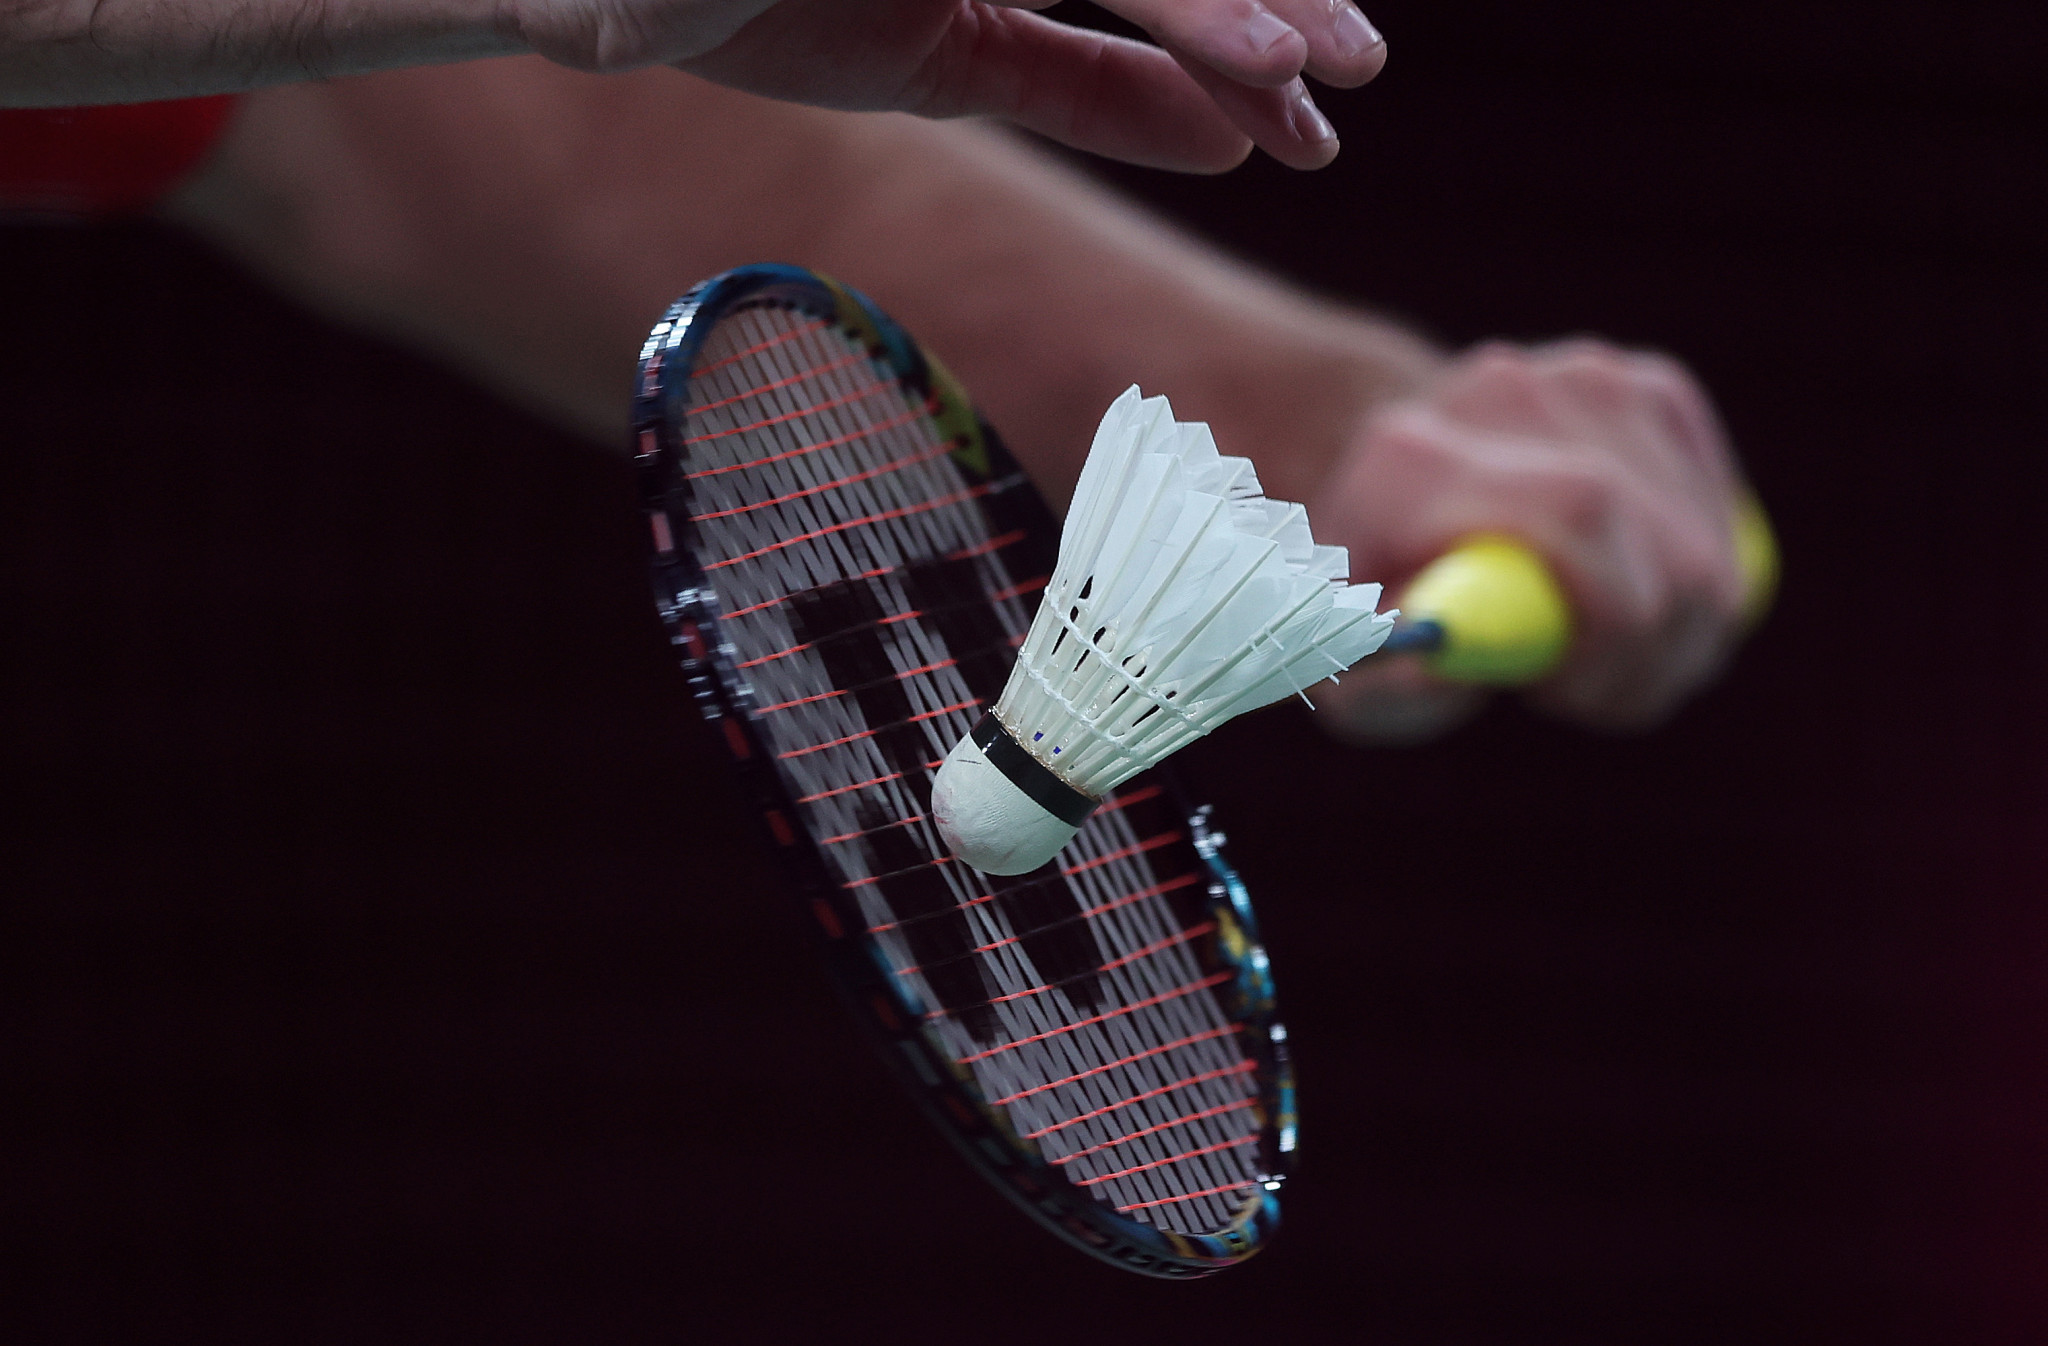 Badminton World Federation announces World Tour calendar for next two seasons